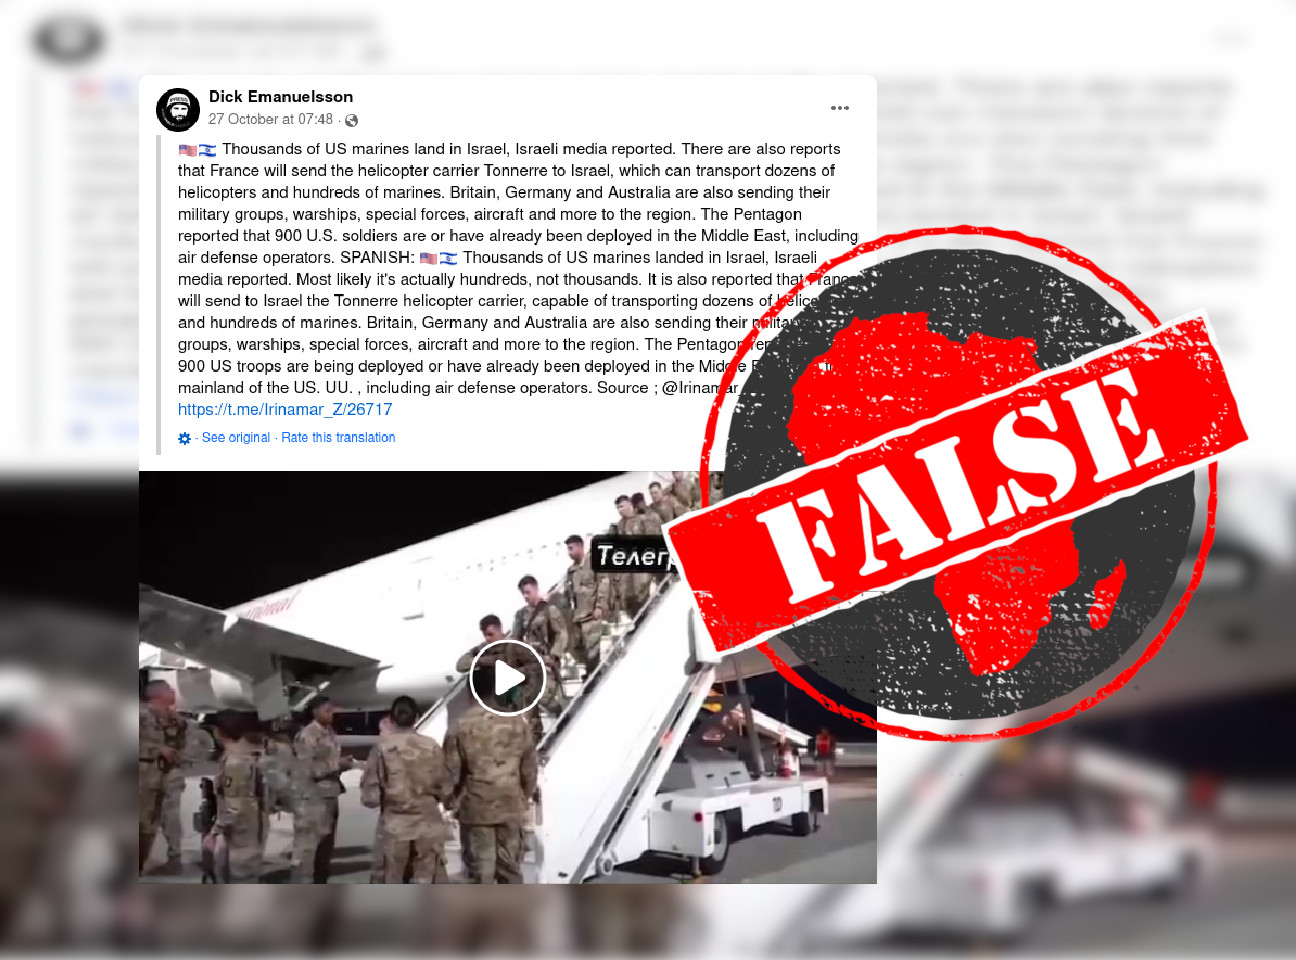 False claim about US troops landing in Israel